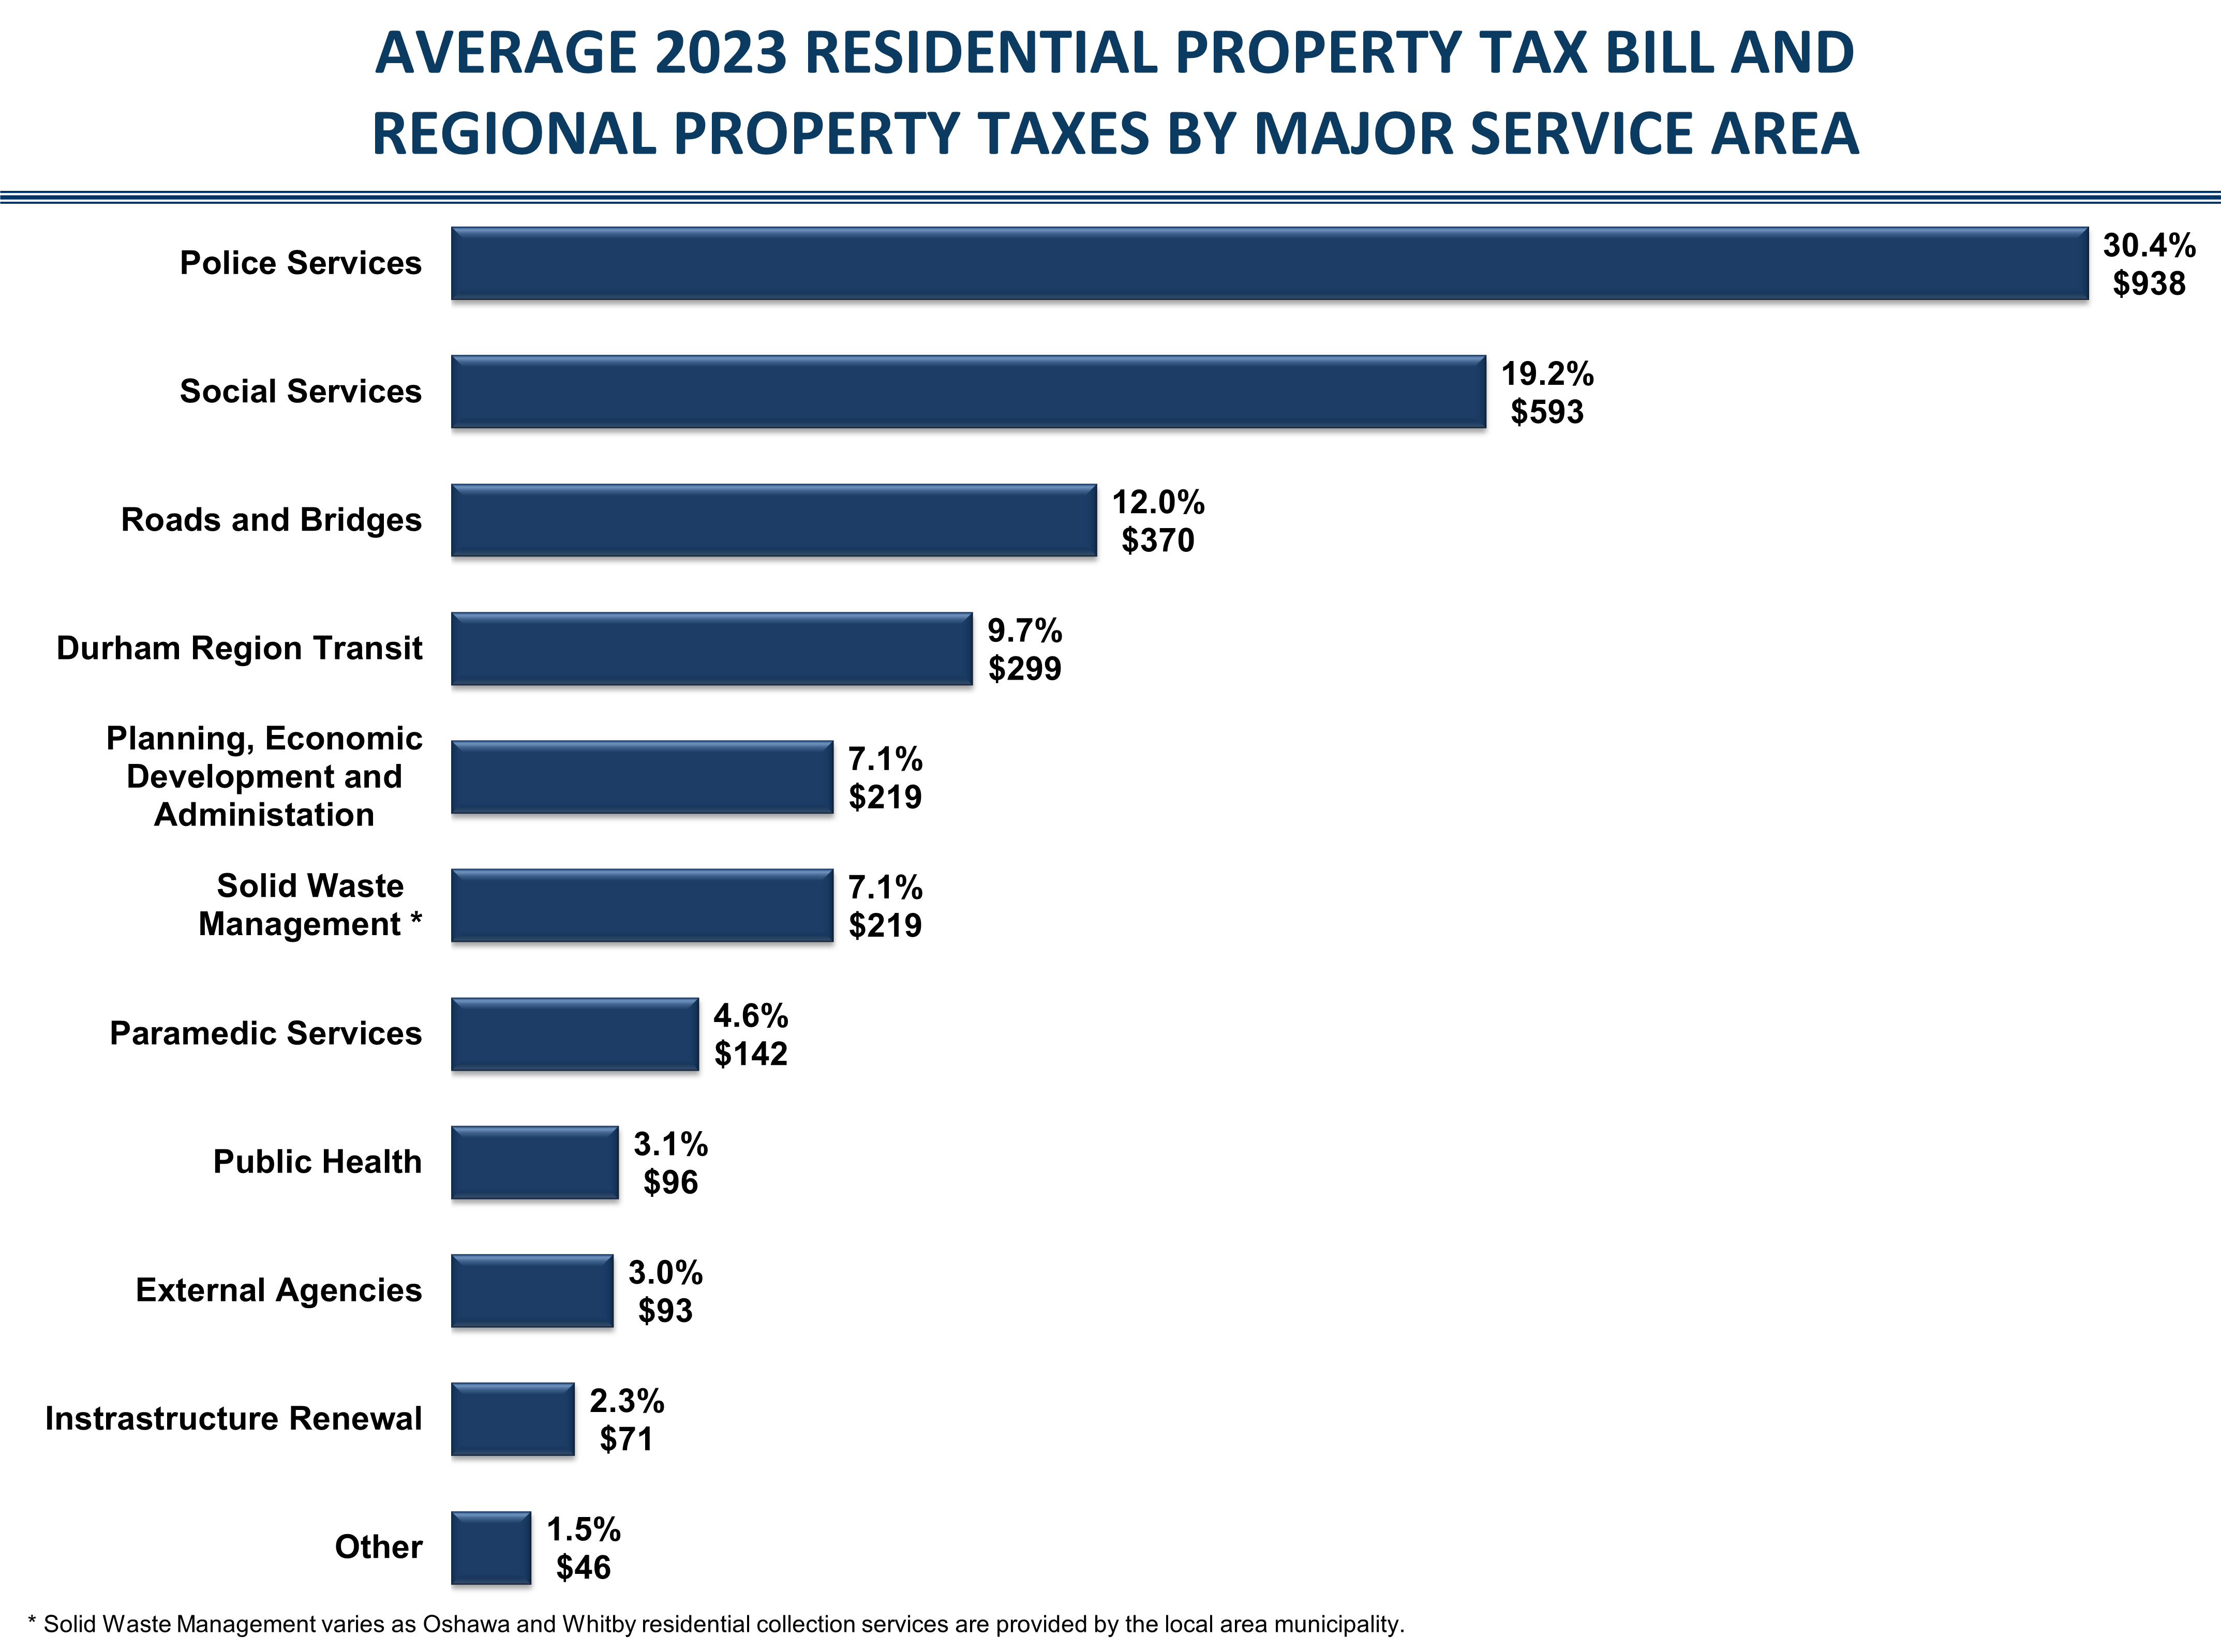 2023 Average Regional Residential Property Tax Bill